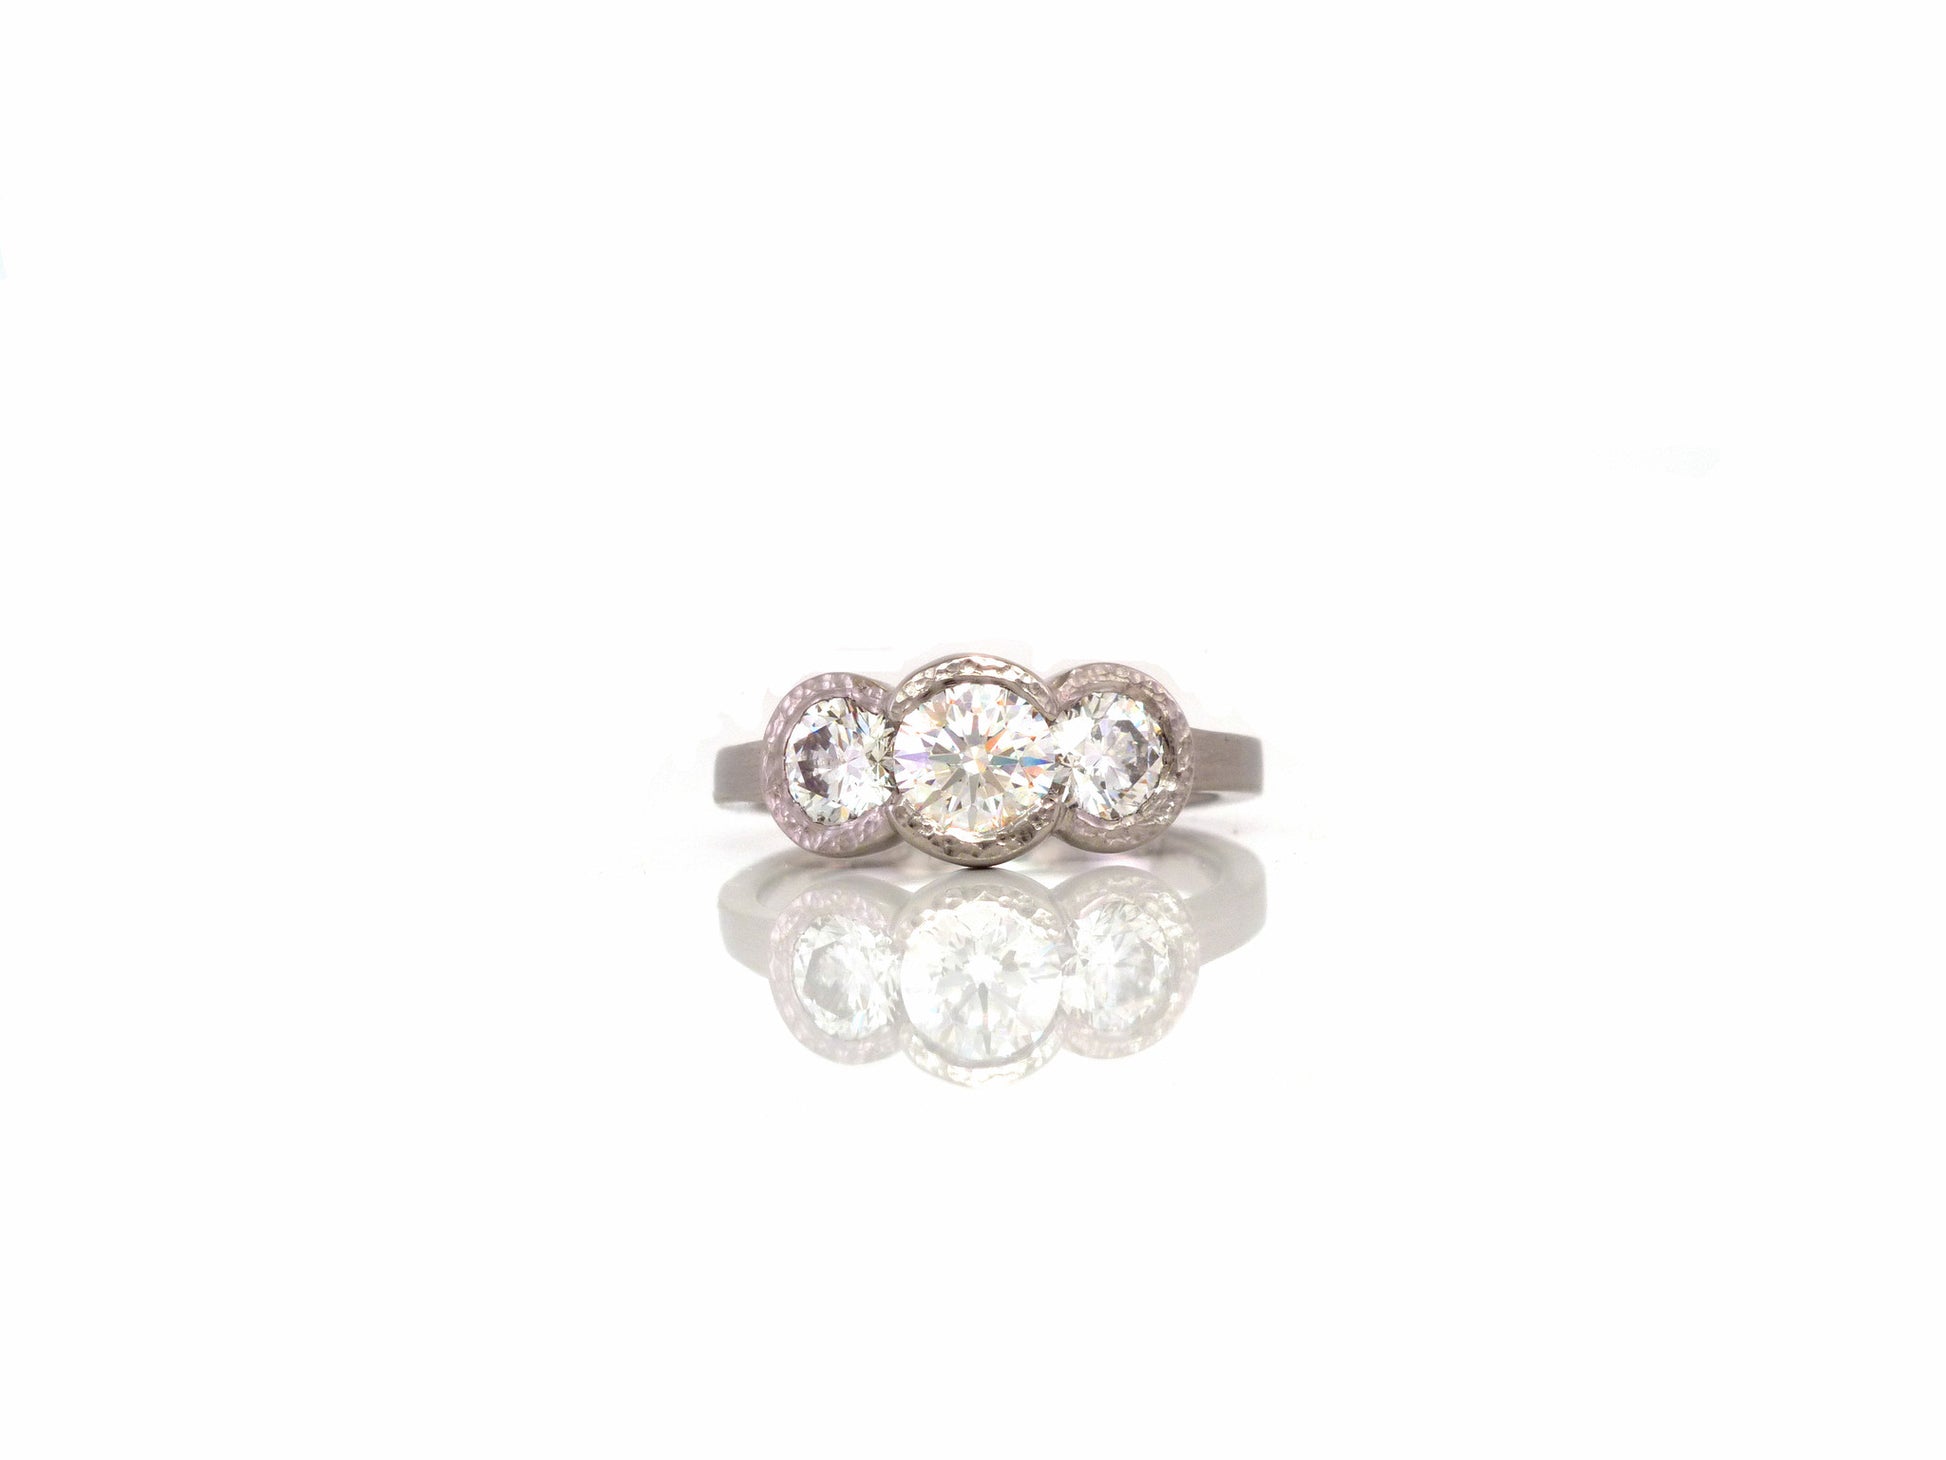 Handmade Canadian diamond engagement rings by ZEALmetal, Nicole Horlor, in Kingston, ON, Canada